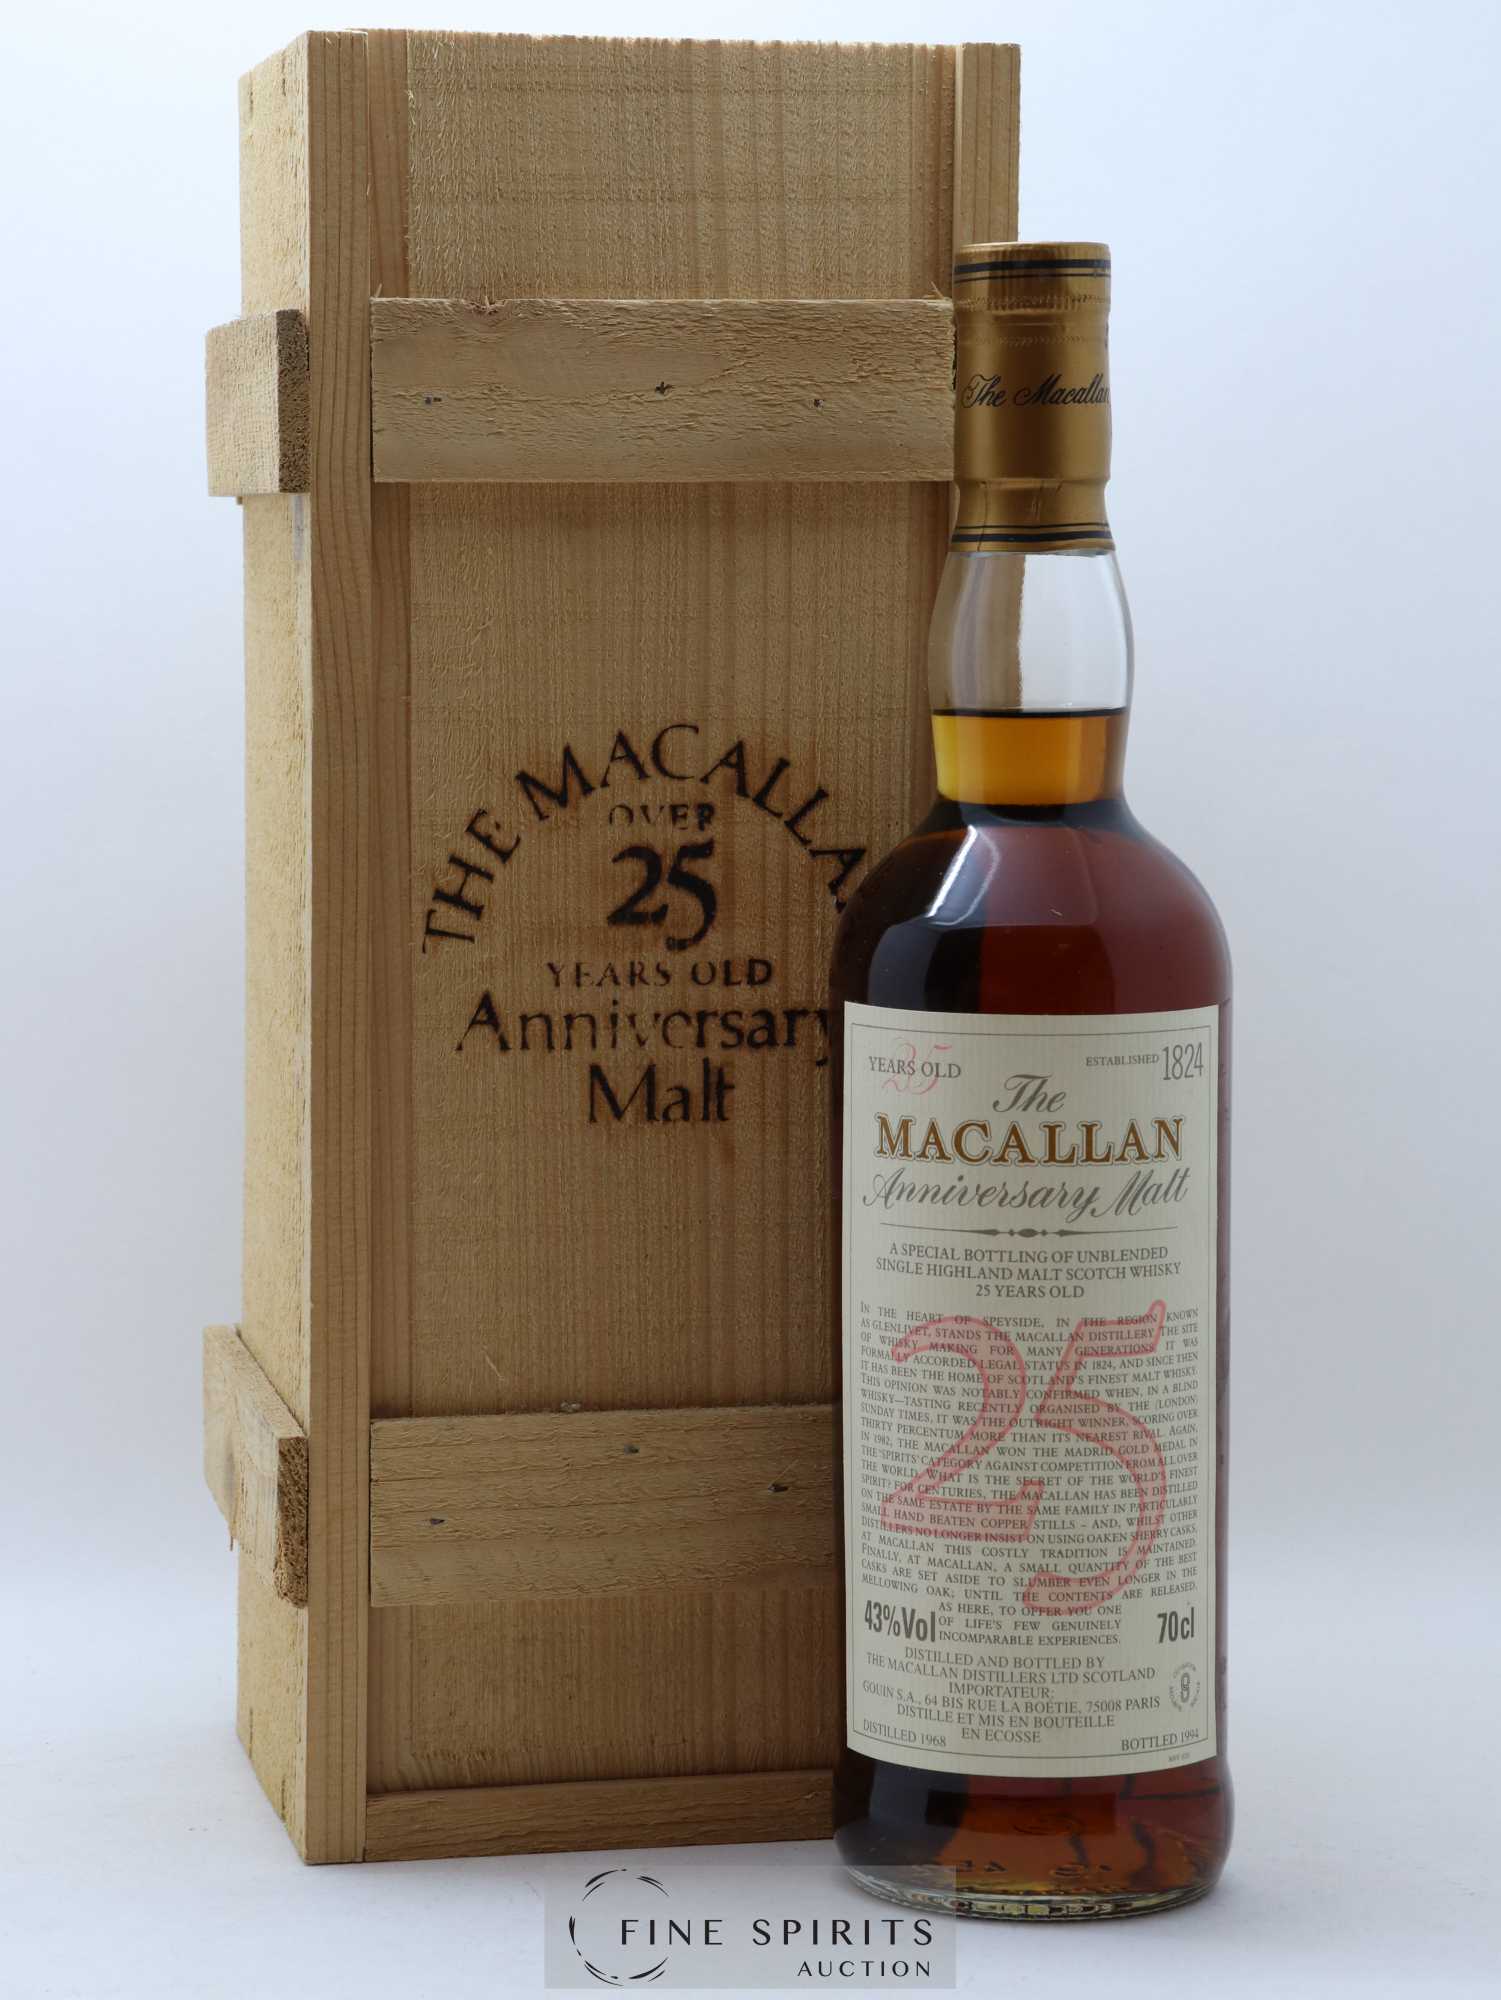 Macallan (The) 25 years 1968 Of. Anniversary Malt bottled 1994 Special Bottling 